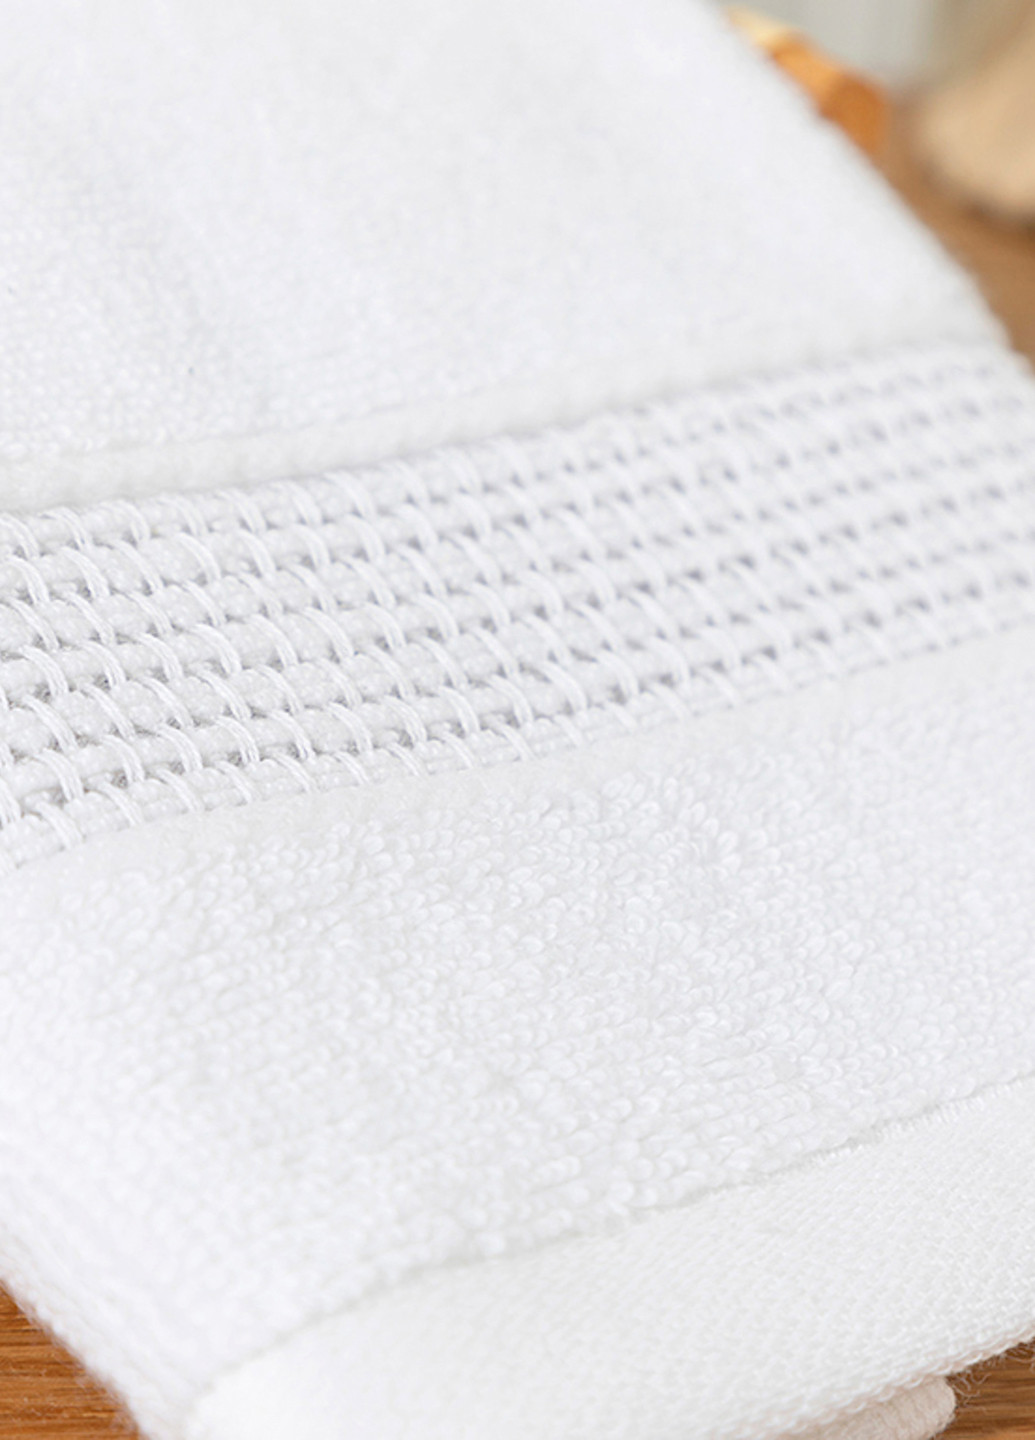 English Home полотенце для рук, 30х50 см однотонный белый производство - Турция